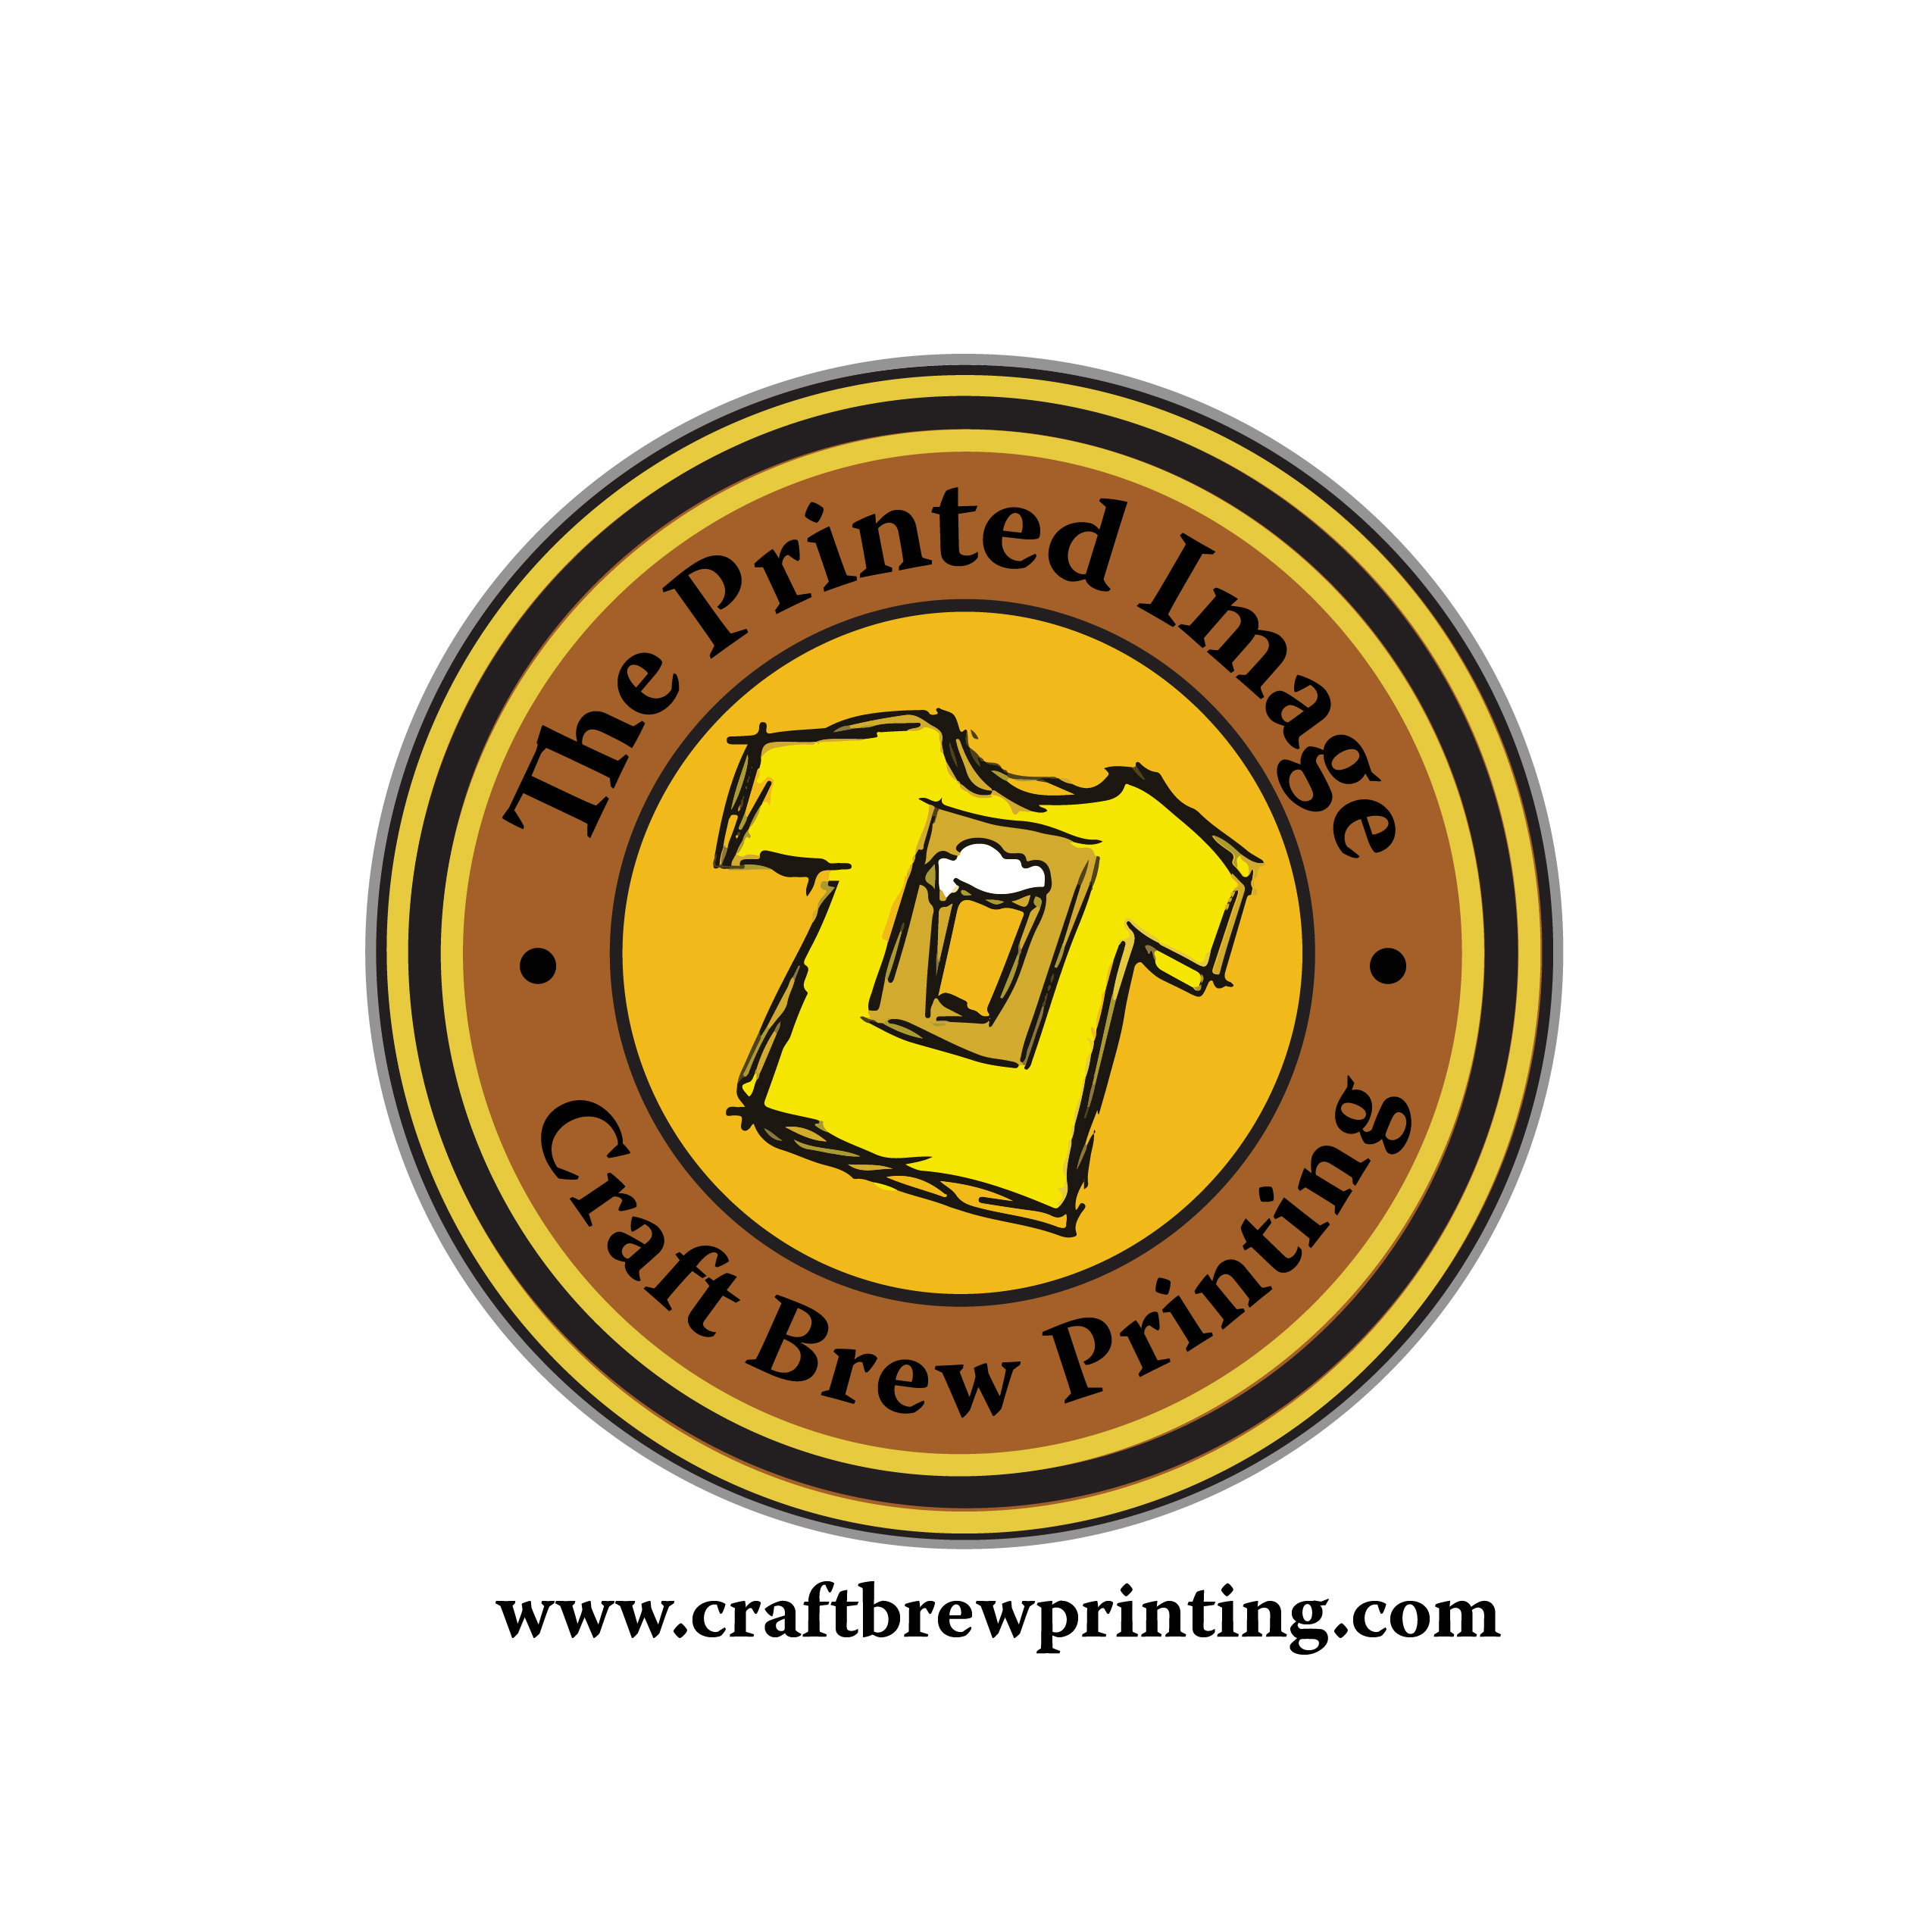 Craft Brew Printing (The Printed Image)